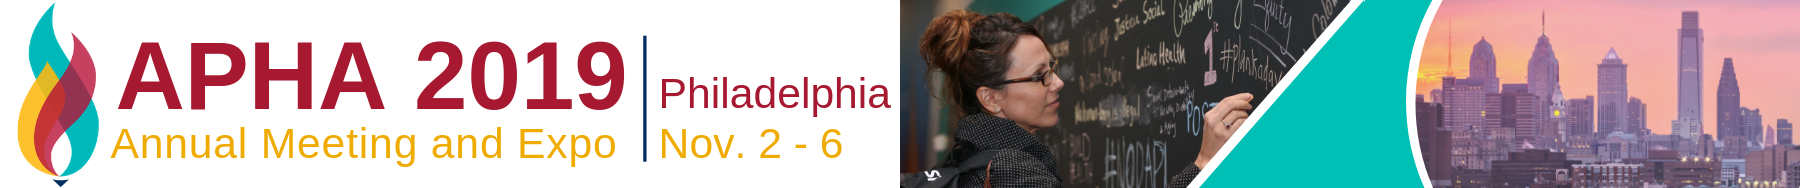 APHA's 2019 Annual Meeting and Expo (Nov. 2 - Nov. 6)